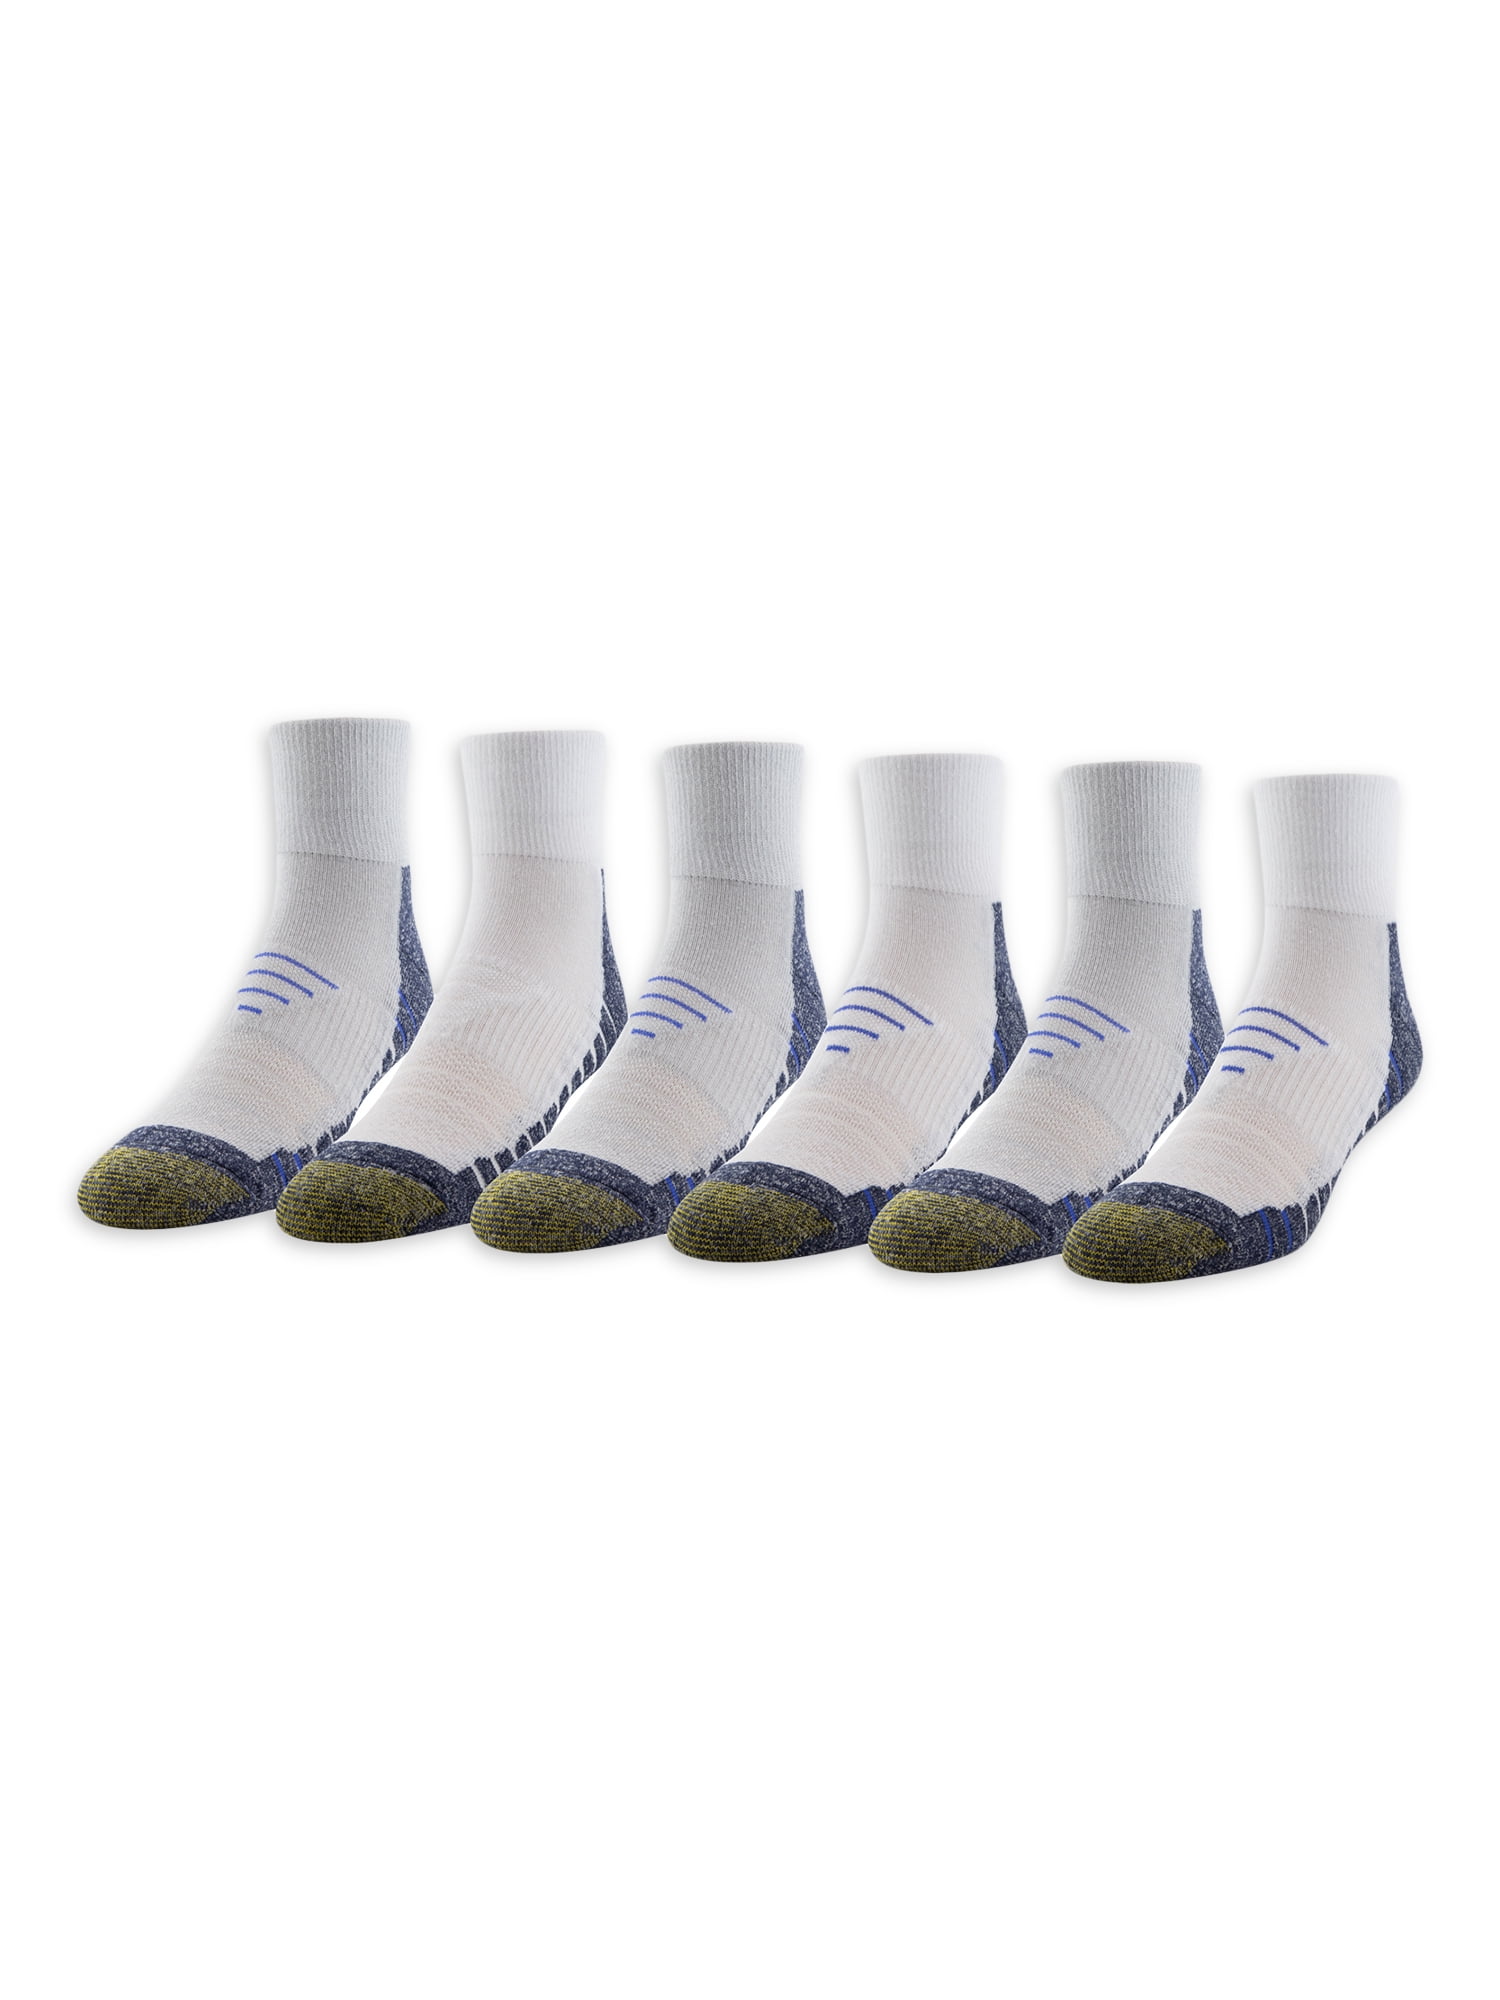 GOLDTOE Edition Men's ProSport Cushion Max Ankle Socks, 6-Pack